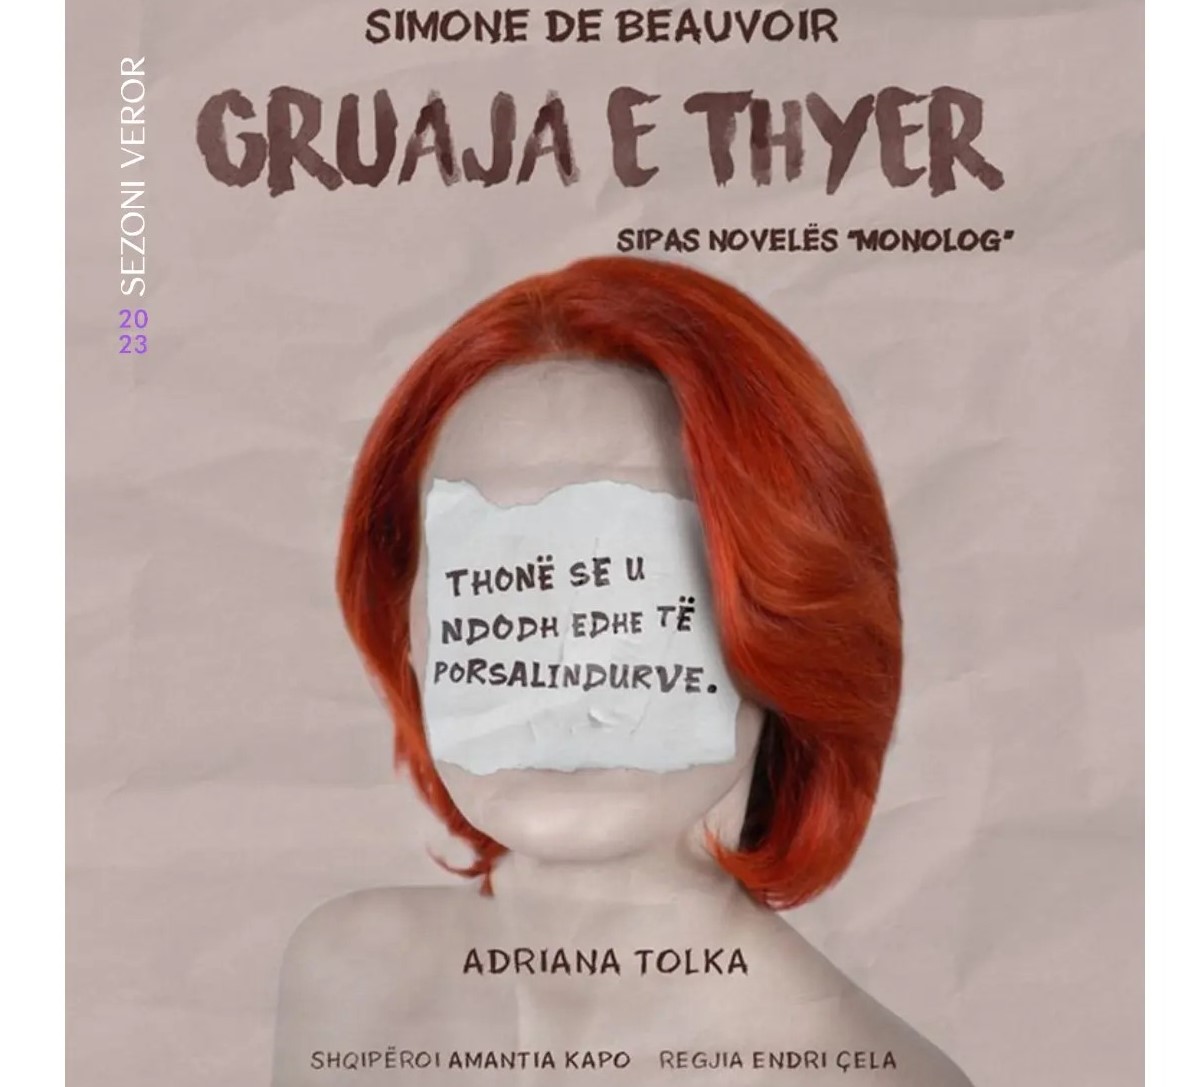 Afishe e shfaqjes'' Gruaja e thyer''